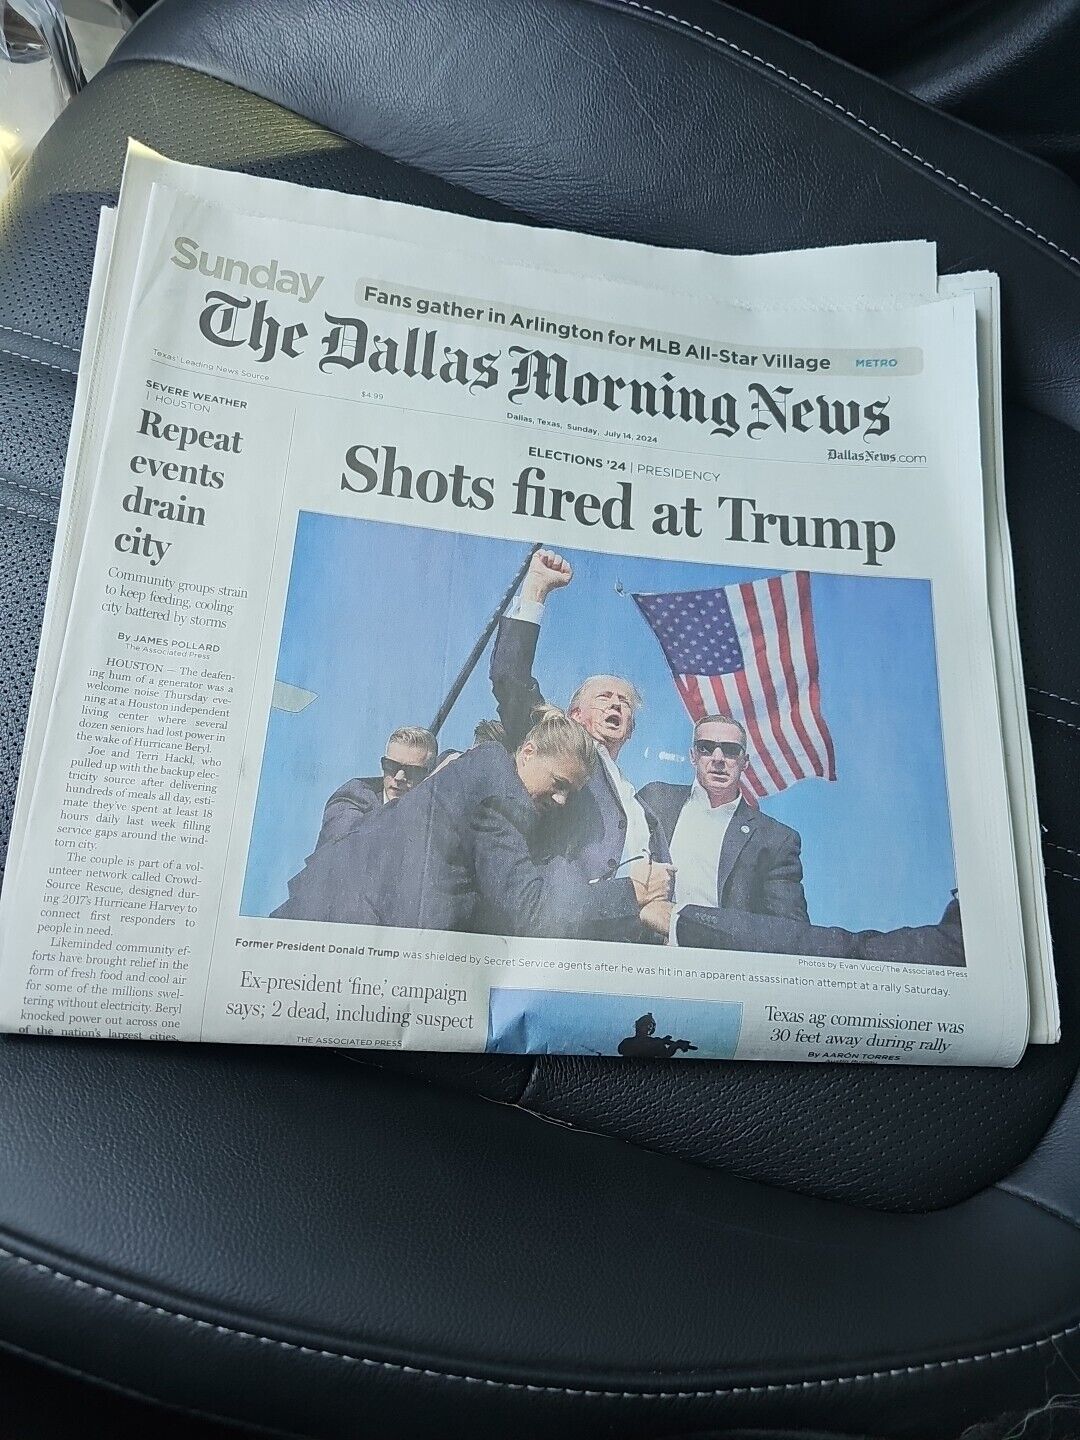 The Dallas Morning News Shots Fired at Trump Sunday Edition 07/14/2024